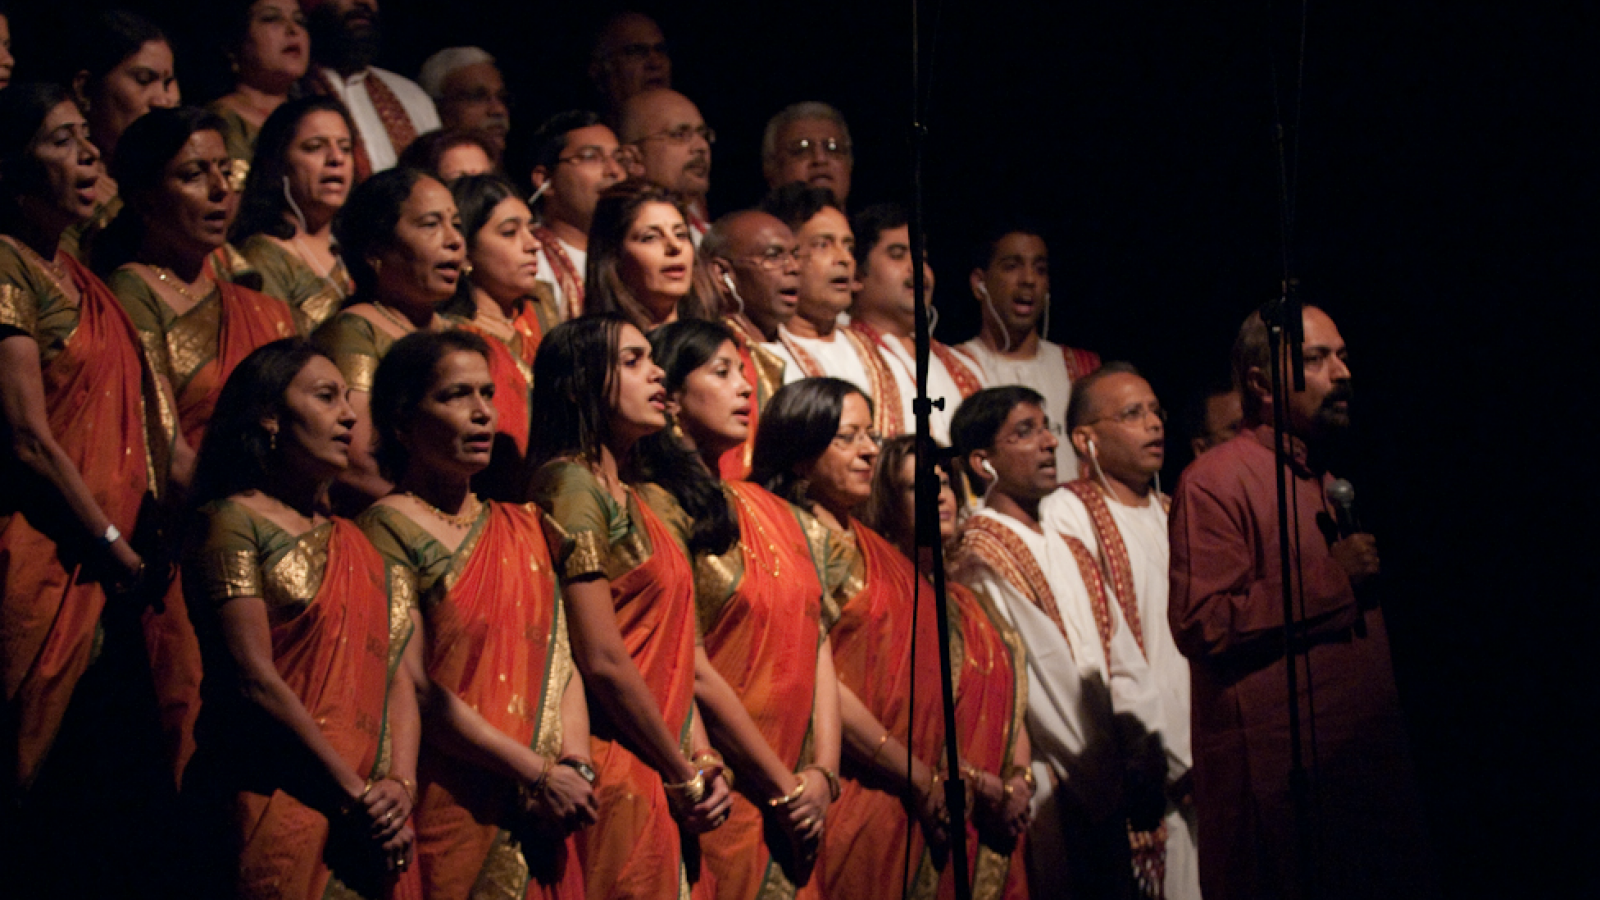 Kanniks standing in front of choir singers